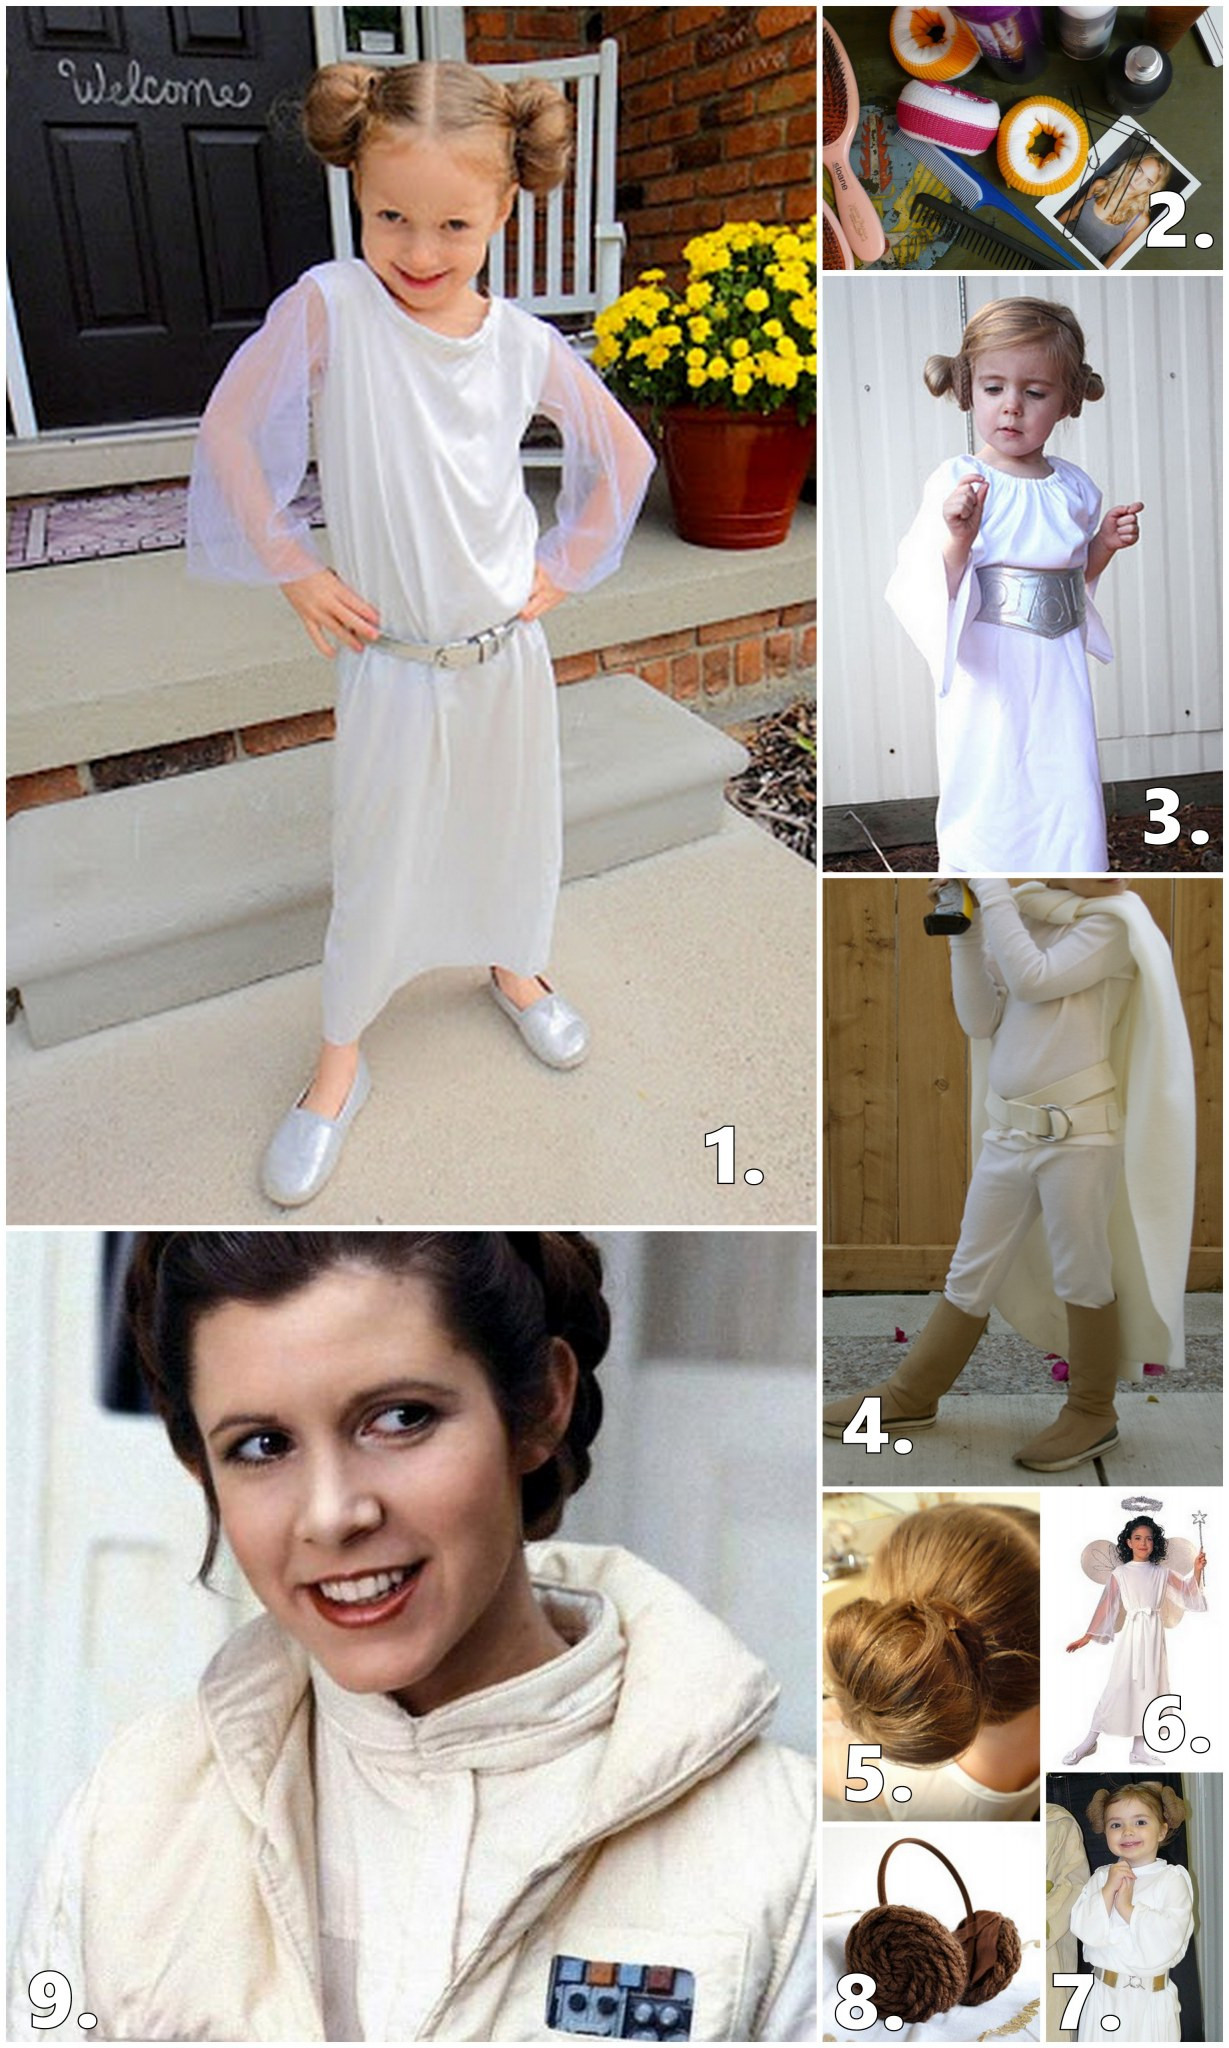 Best ideas about DIY Princess Leia Costume
. Save or Pin Princess Leia Costume Ideas Now.